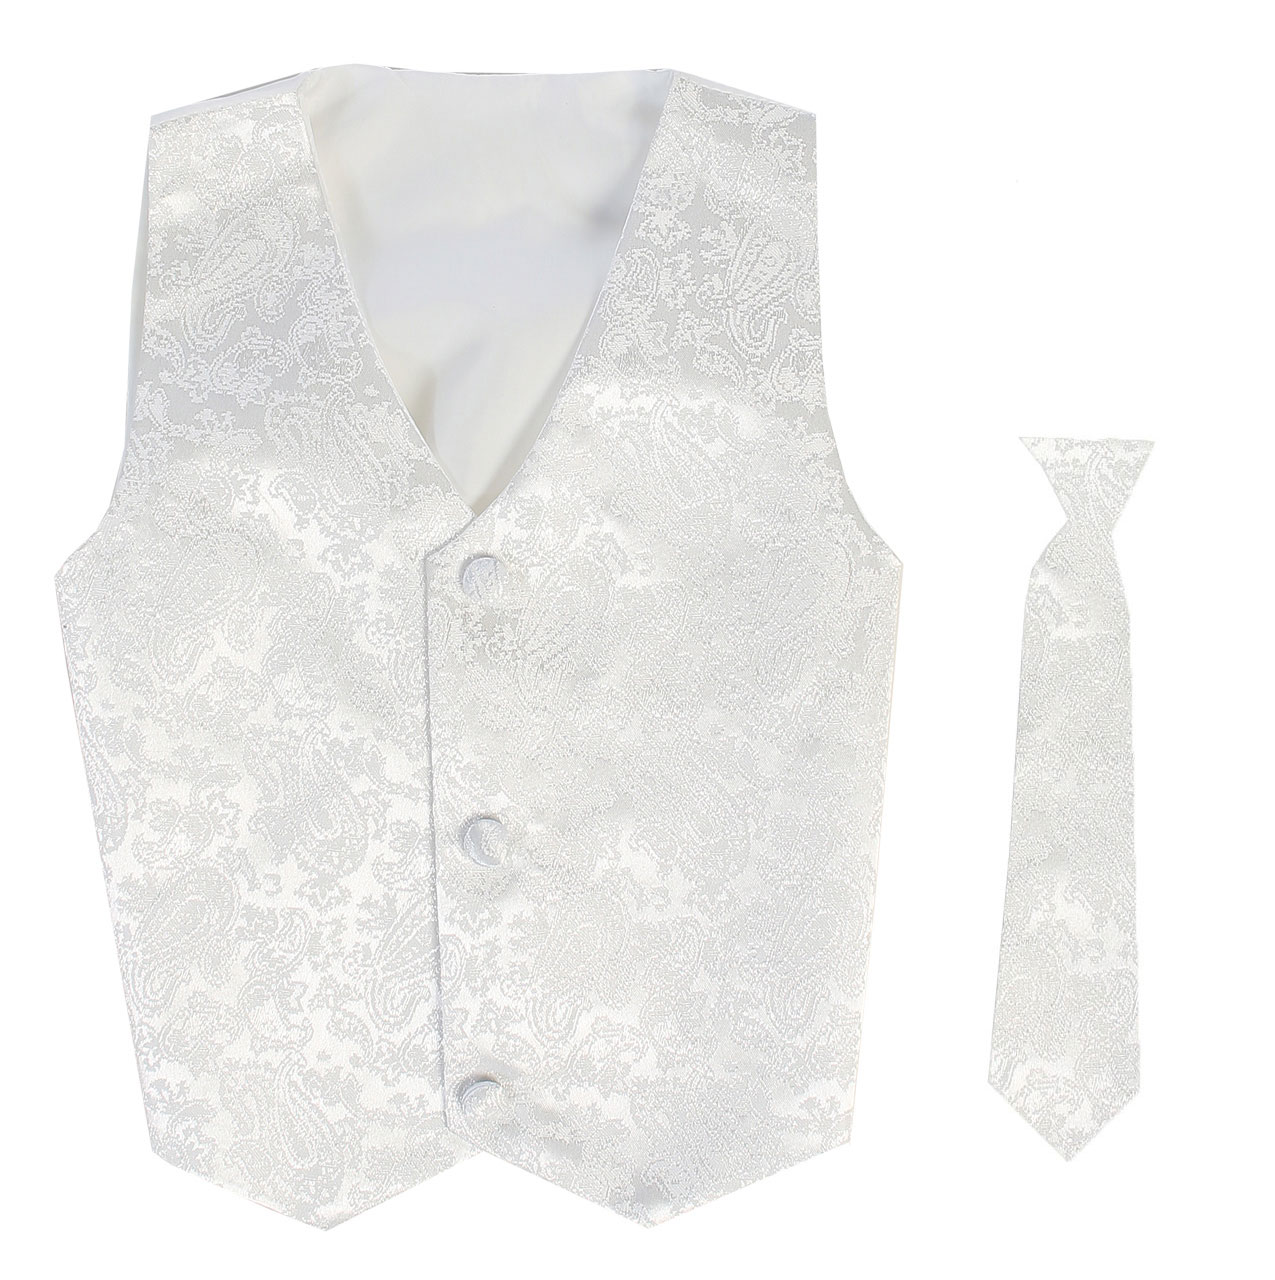 Vest and Clip On Boy Necktie set - White Paisley - 8/10